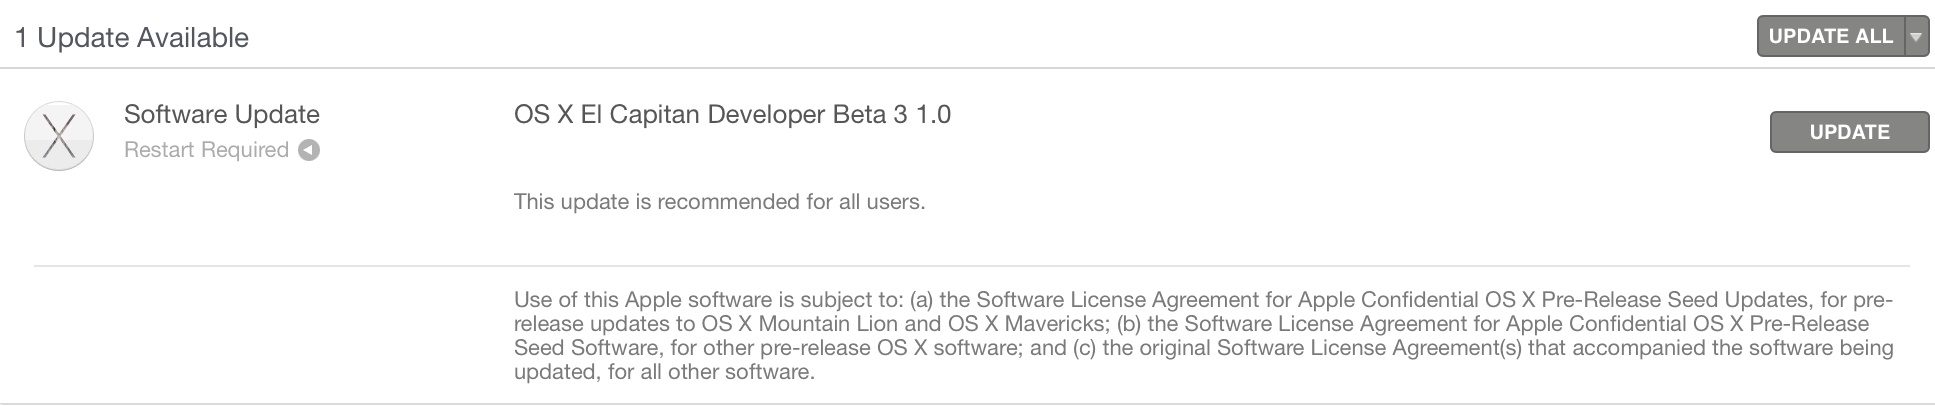 Download di OS X El Capitan per sviluppatori beta 3 1.0